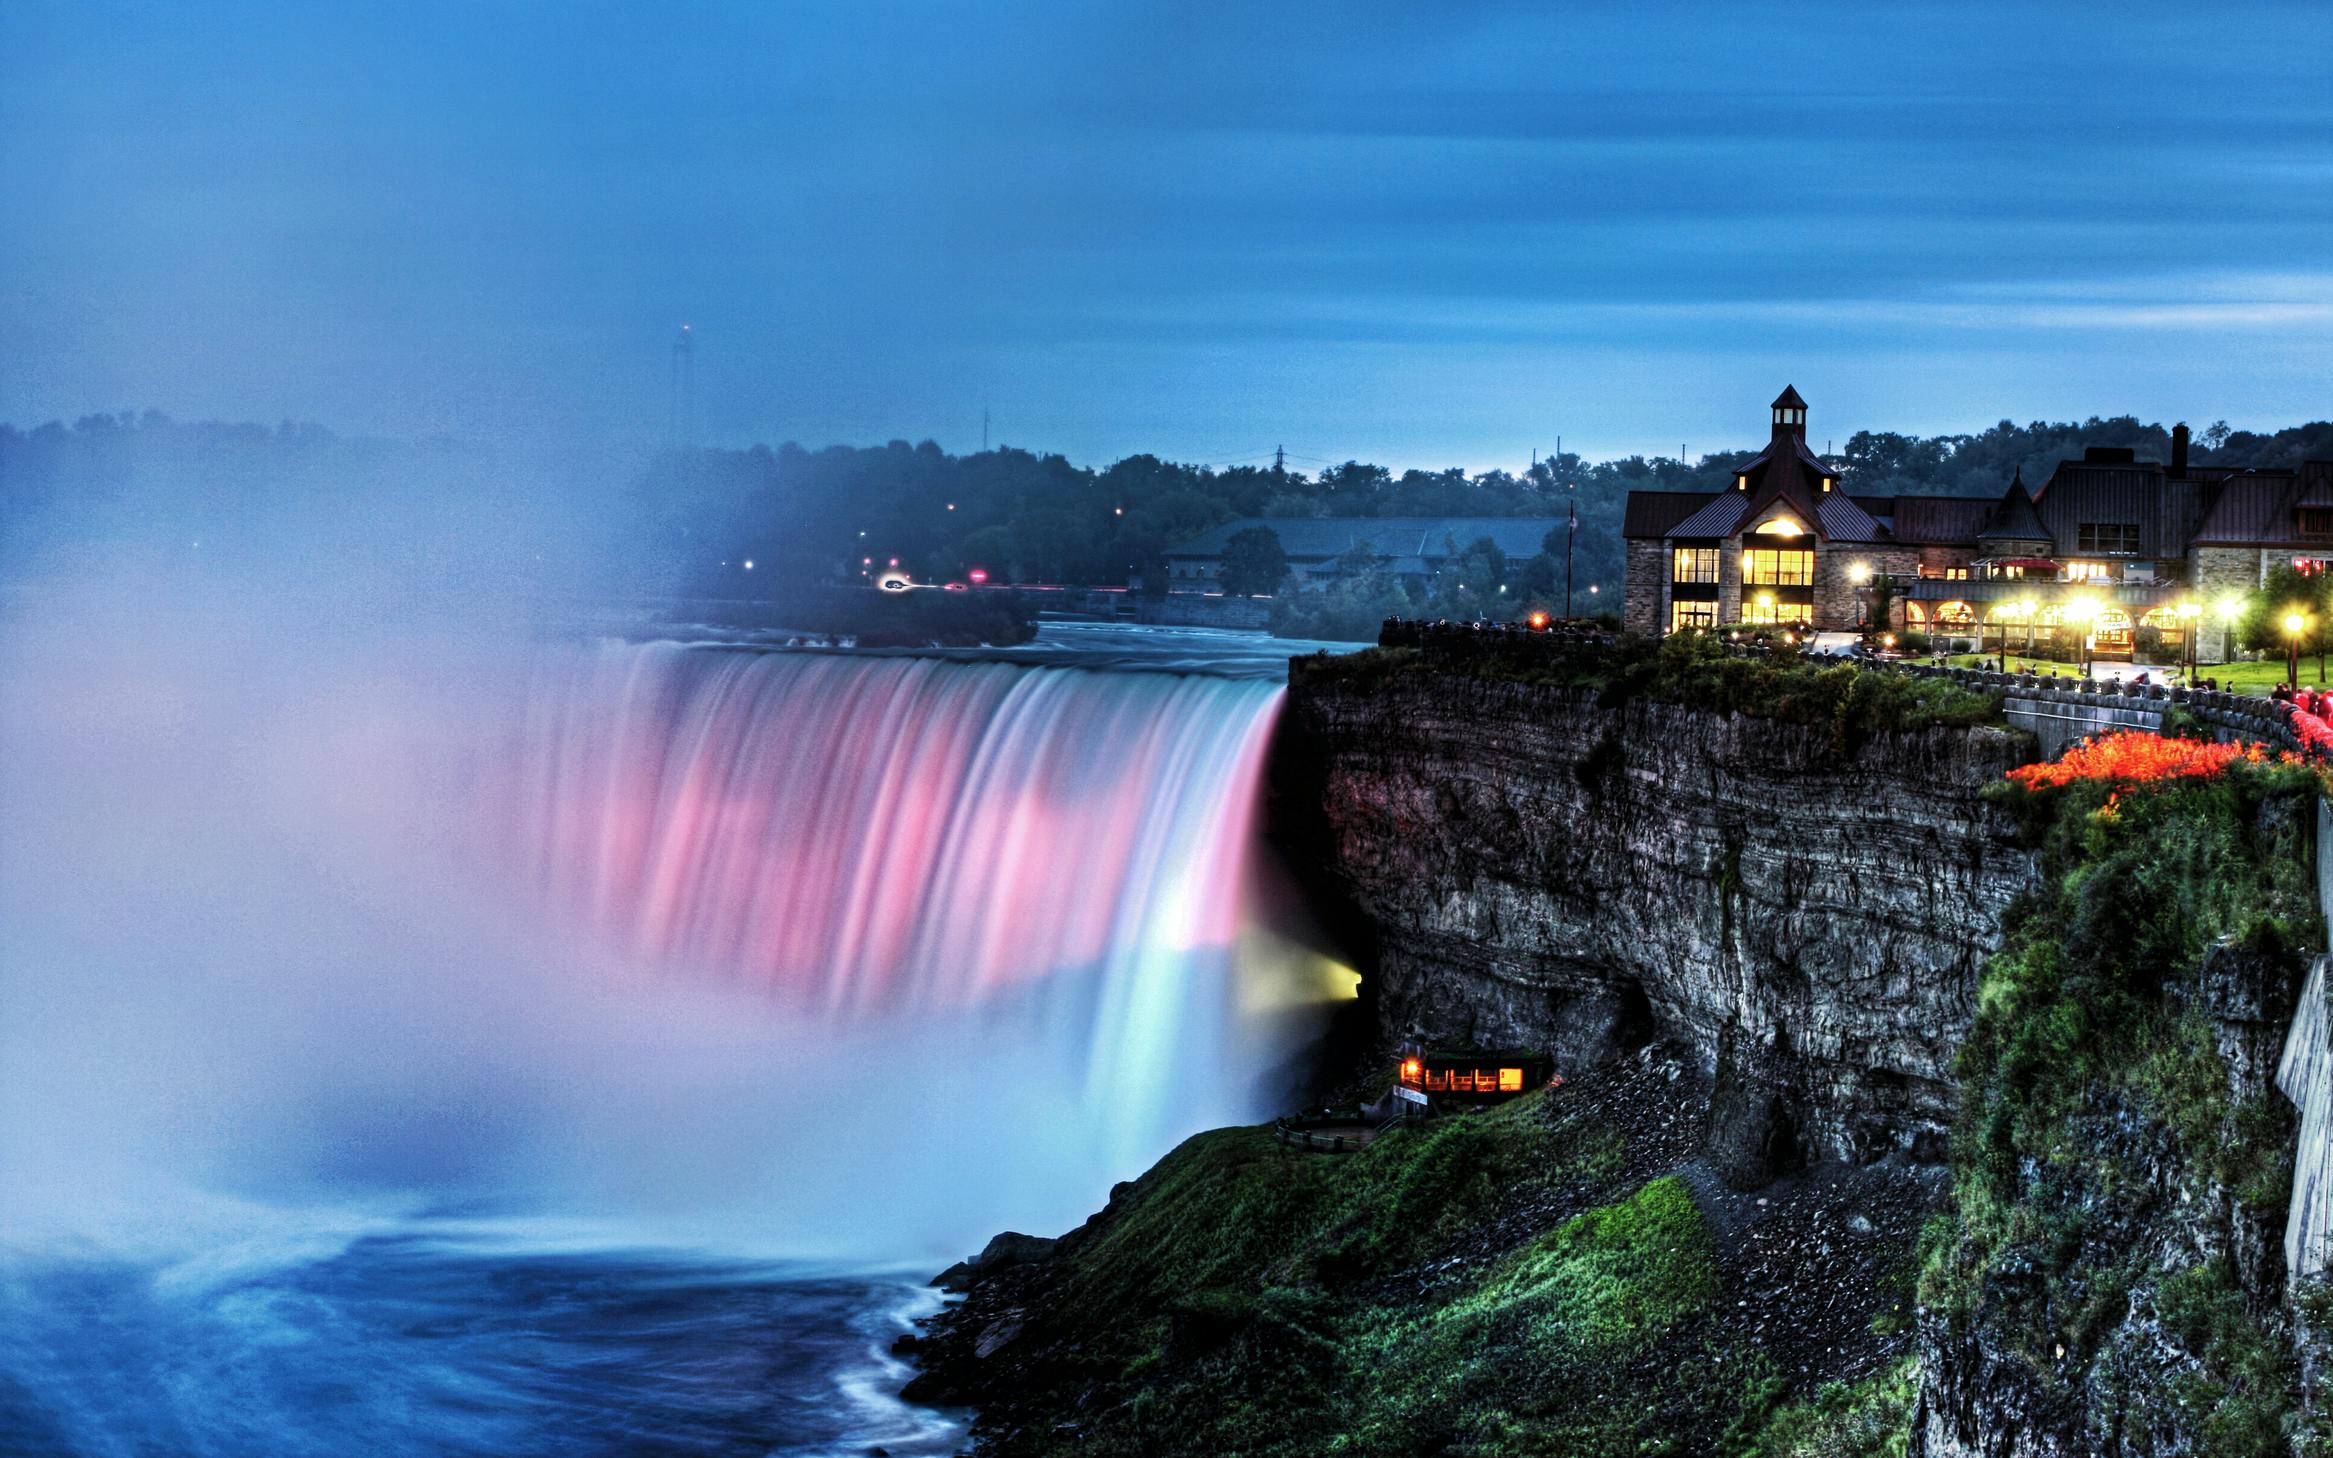 Expérience de nuit sur Niagara au Canada avec Power Station Light Show